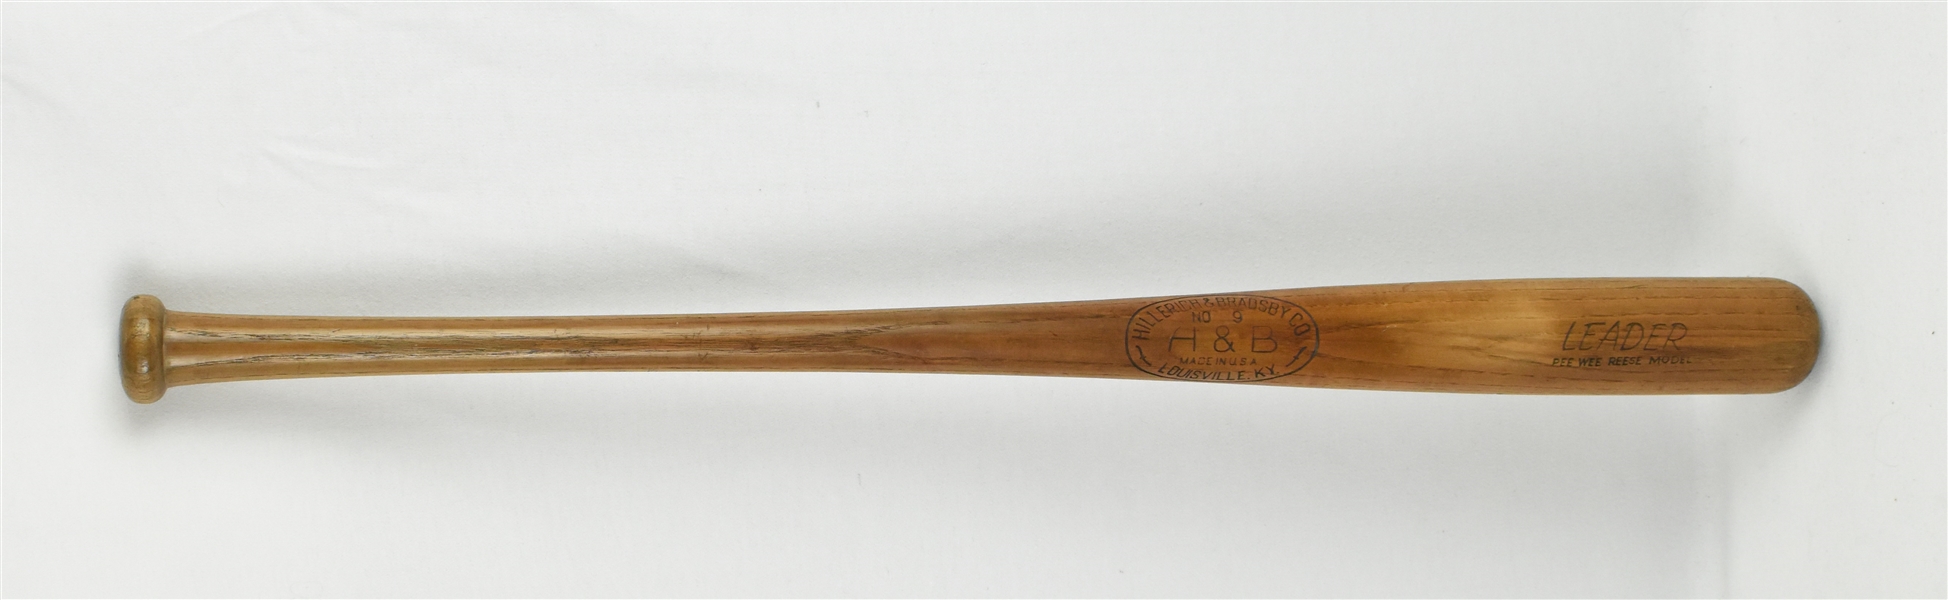 Pee Wee Reese 1952-1959 Louisville Slugger Baseball Bat